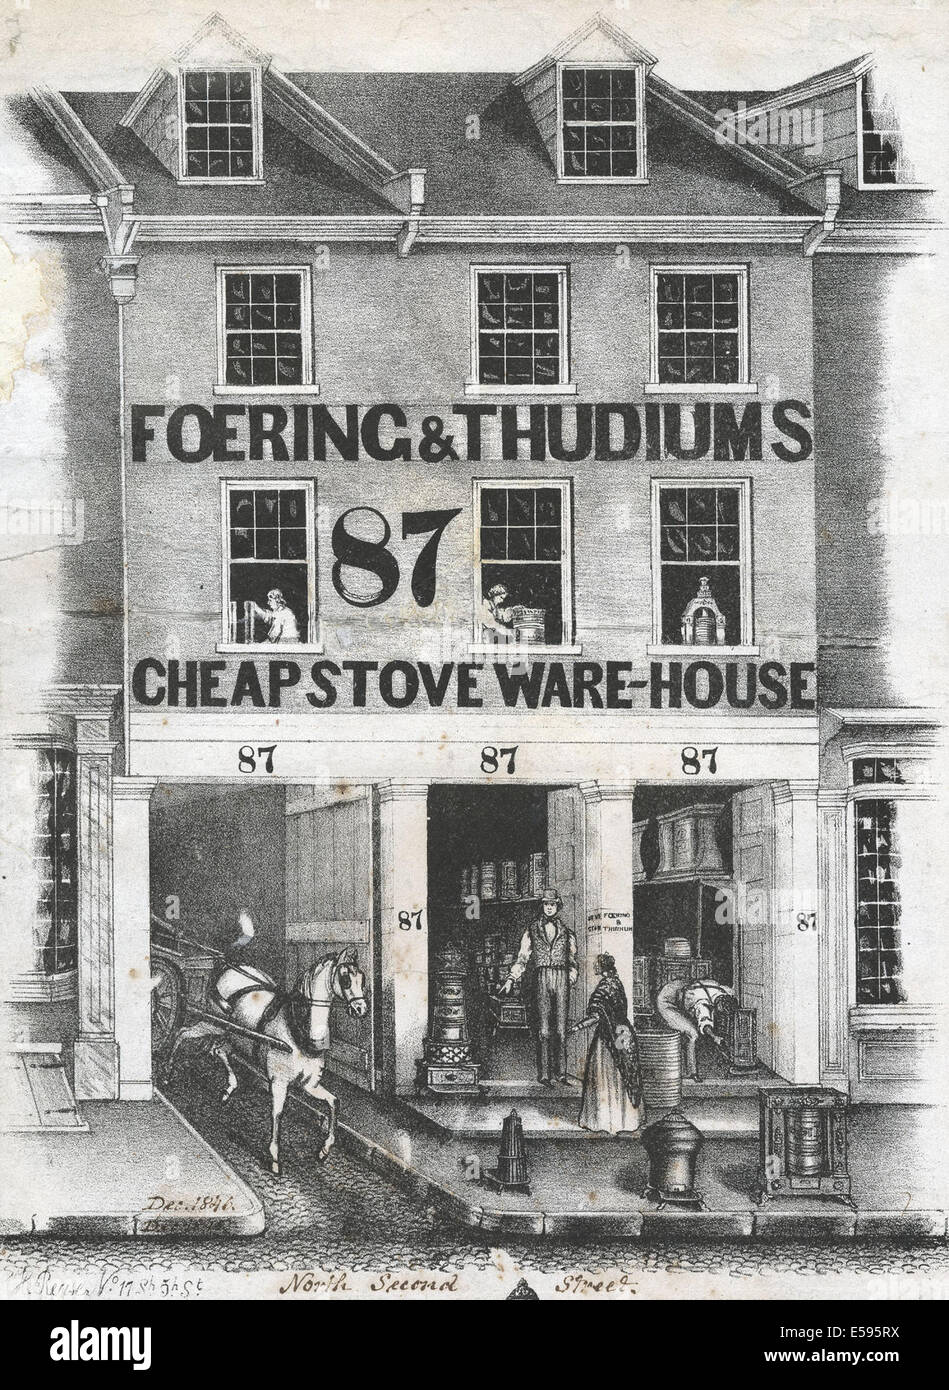 & Thudiums Foering estufa baratos ware-house, [Diciembre de 1846] Foto de stock